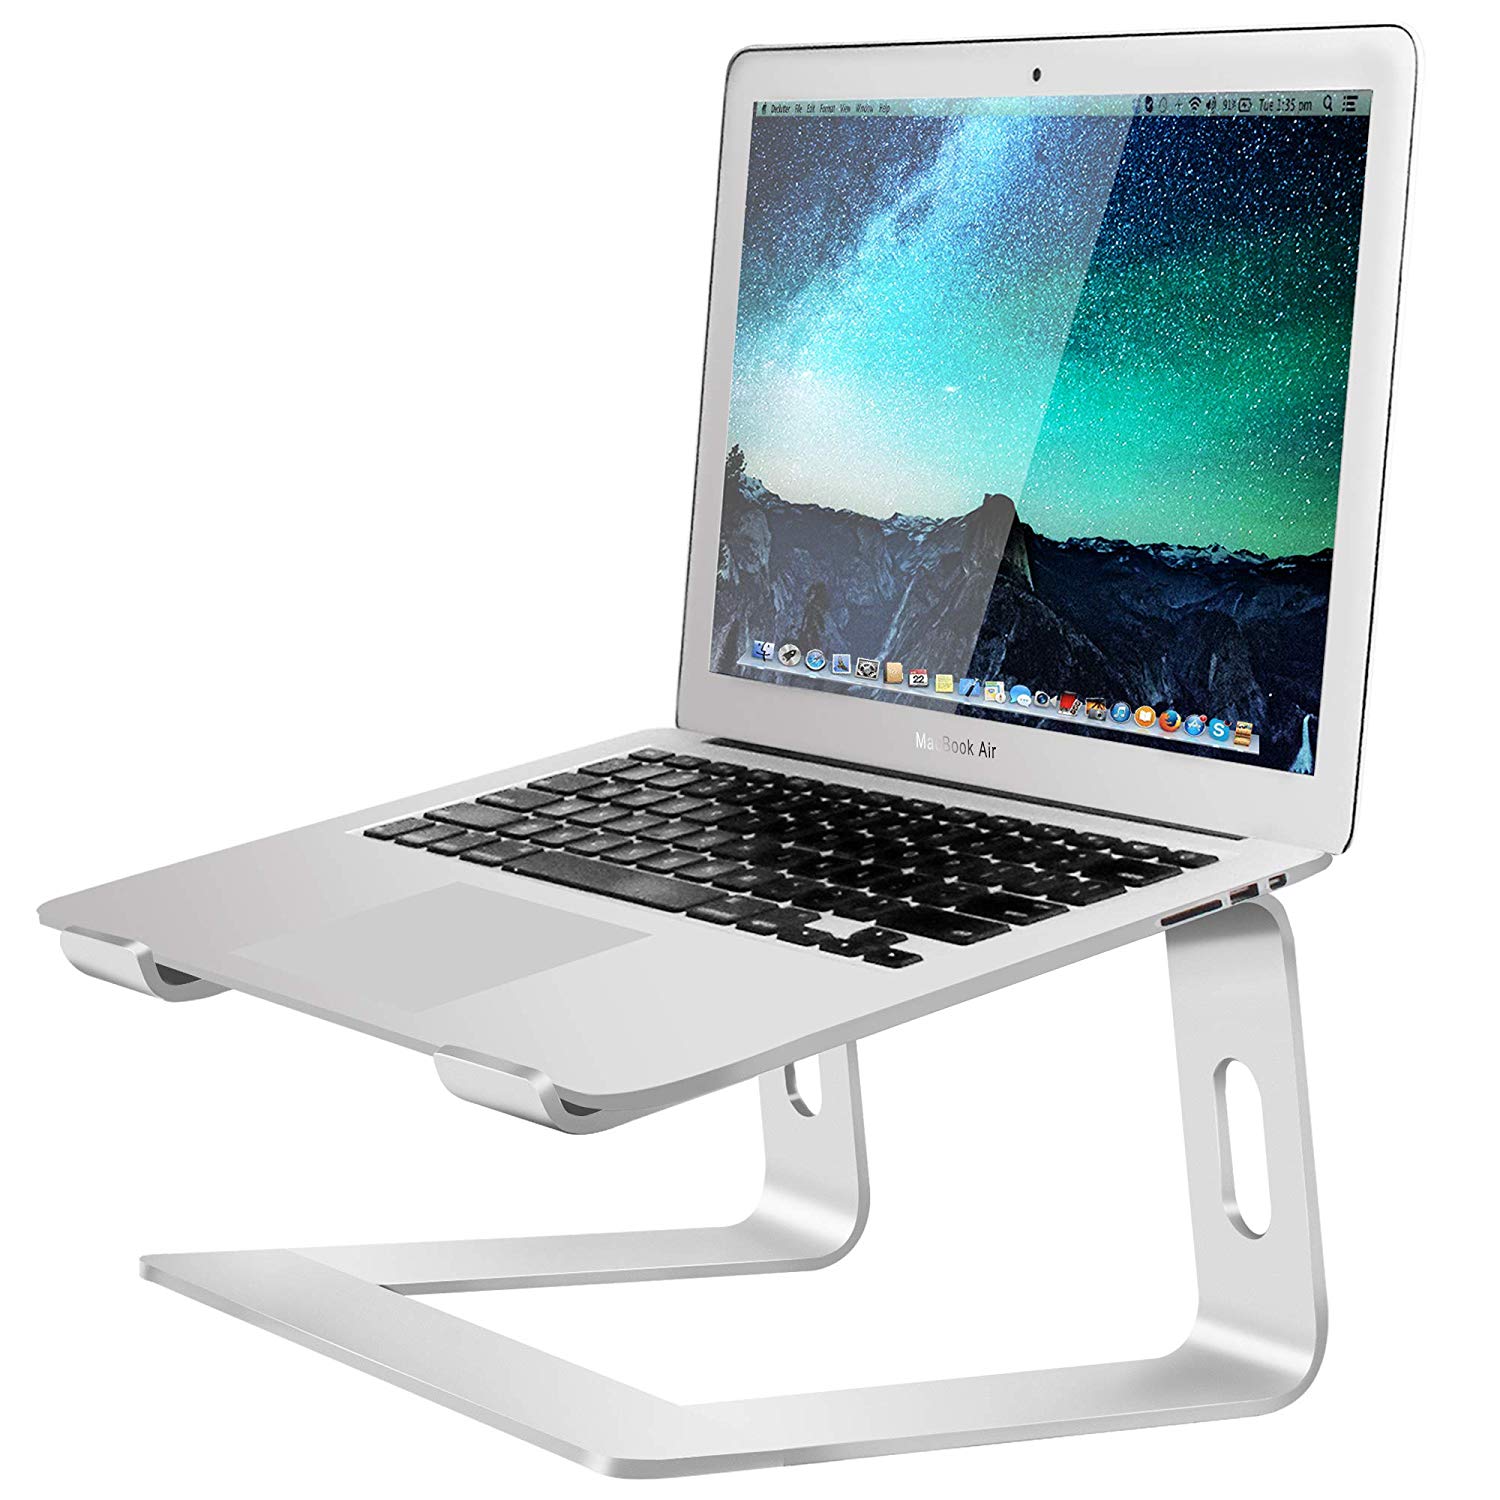 Soundance Aluminum Laptop Stand for Desk Compatible with Mac MacBook Pro Air Apple Notebook, Portable Holder Ergonomic Elevator Metal Riser for 10 to 15.6 inch PC Desktop Computer, LS1 Silver